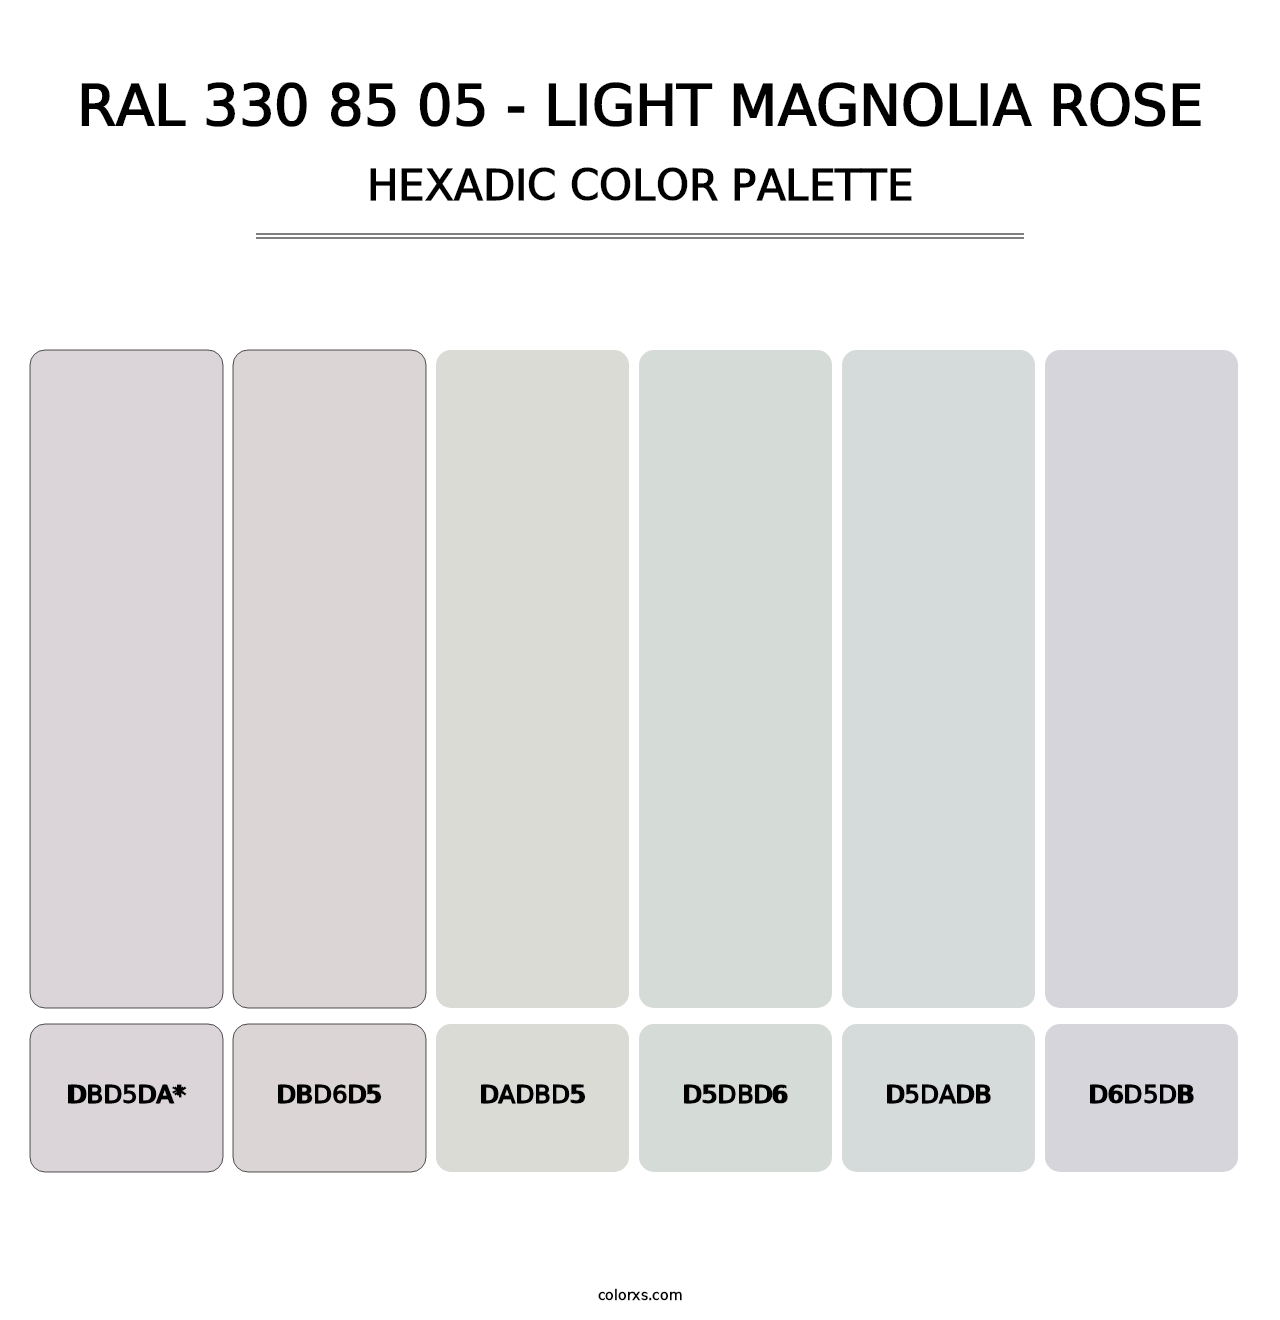 RAL 330 85 05 - Light Magnolia Rose - Hexadic Color Palette